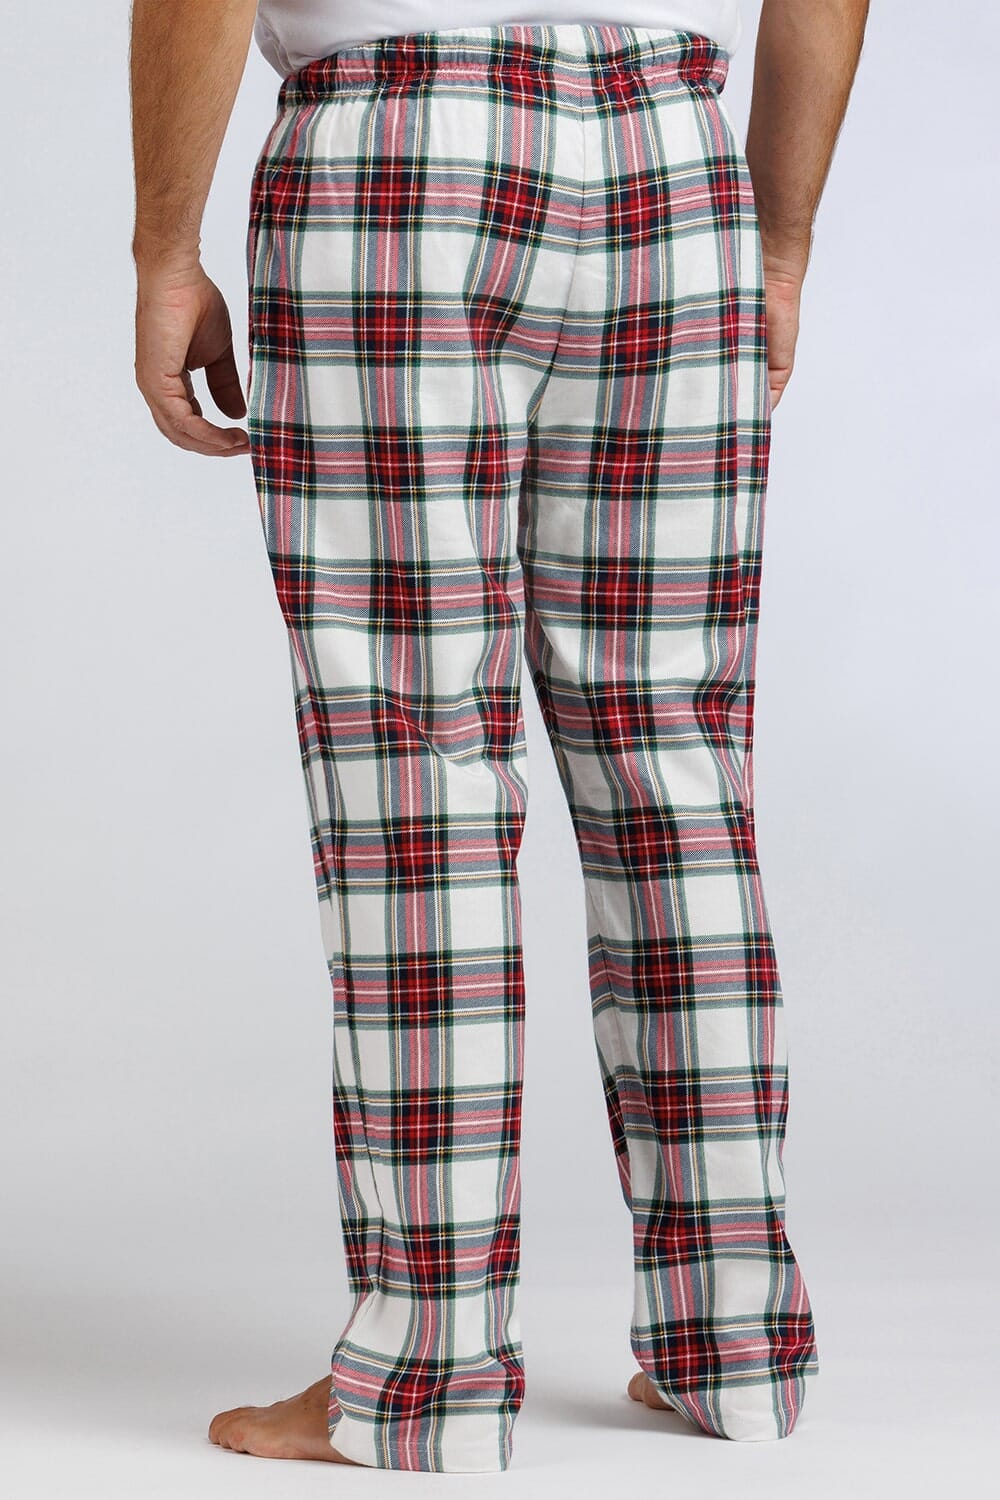 Men's Plaid Pajama Bottoms, Men's Plaid Pajama Pants